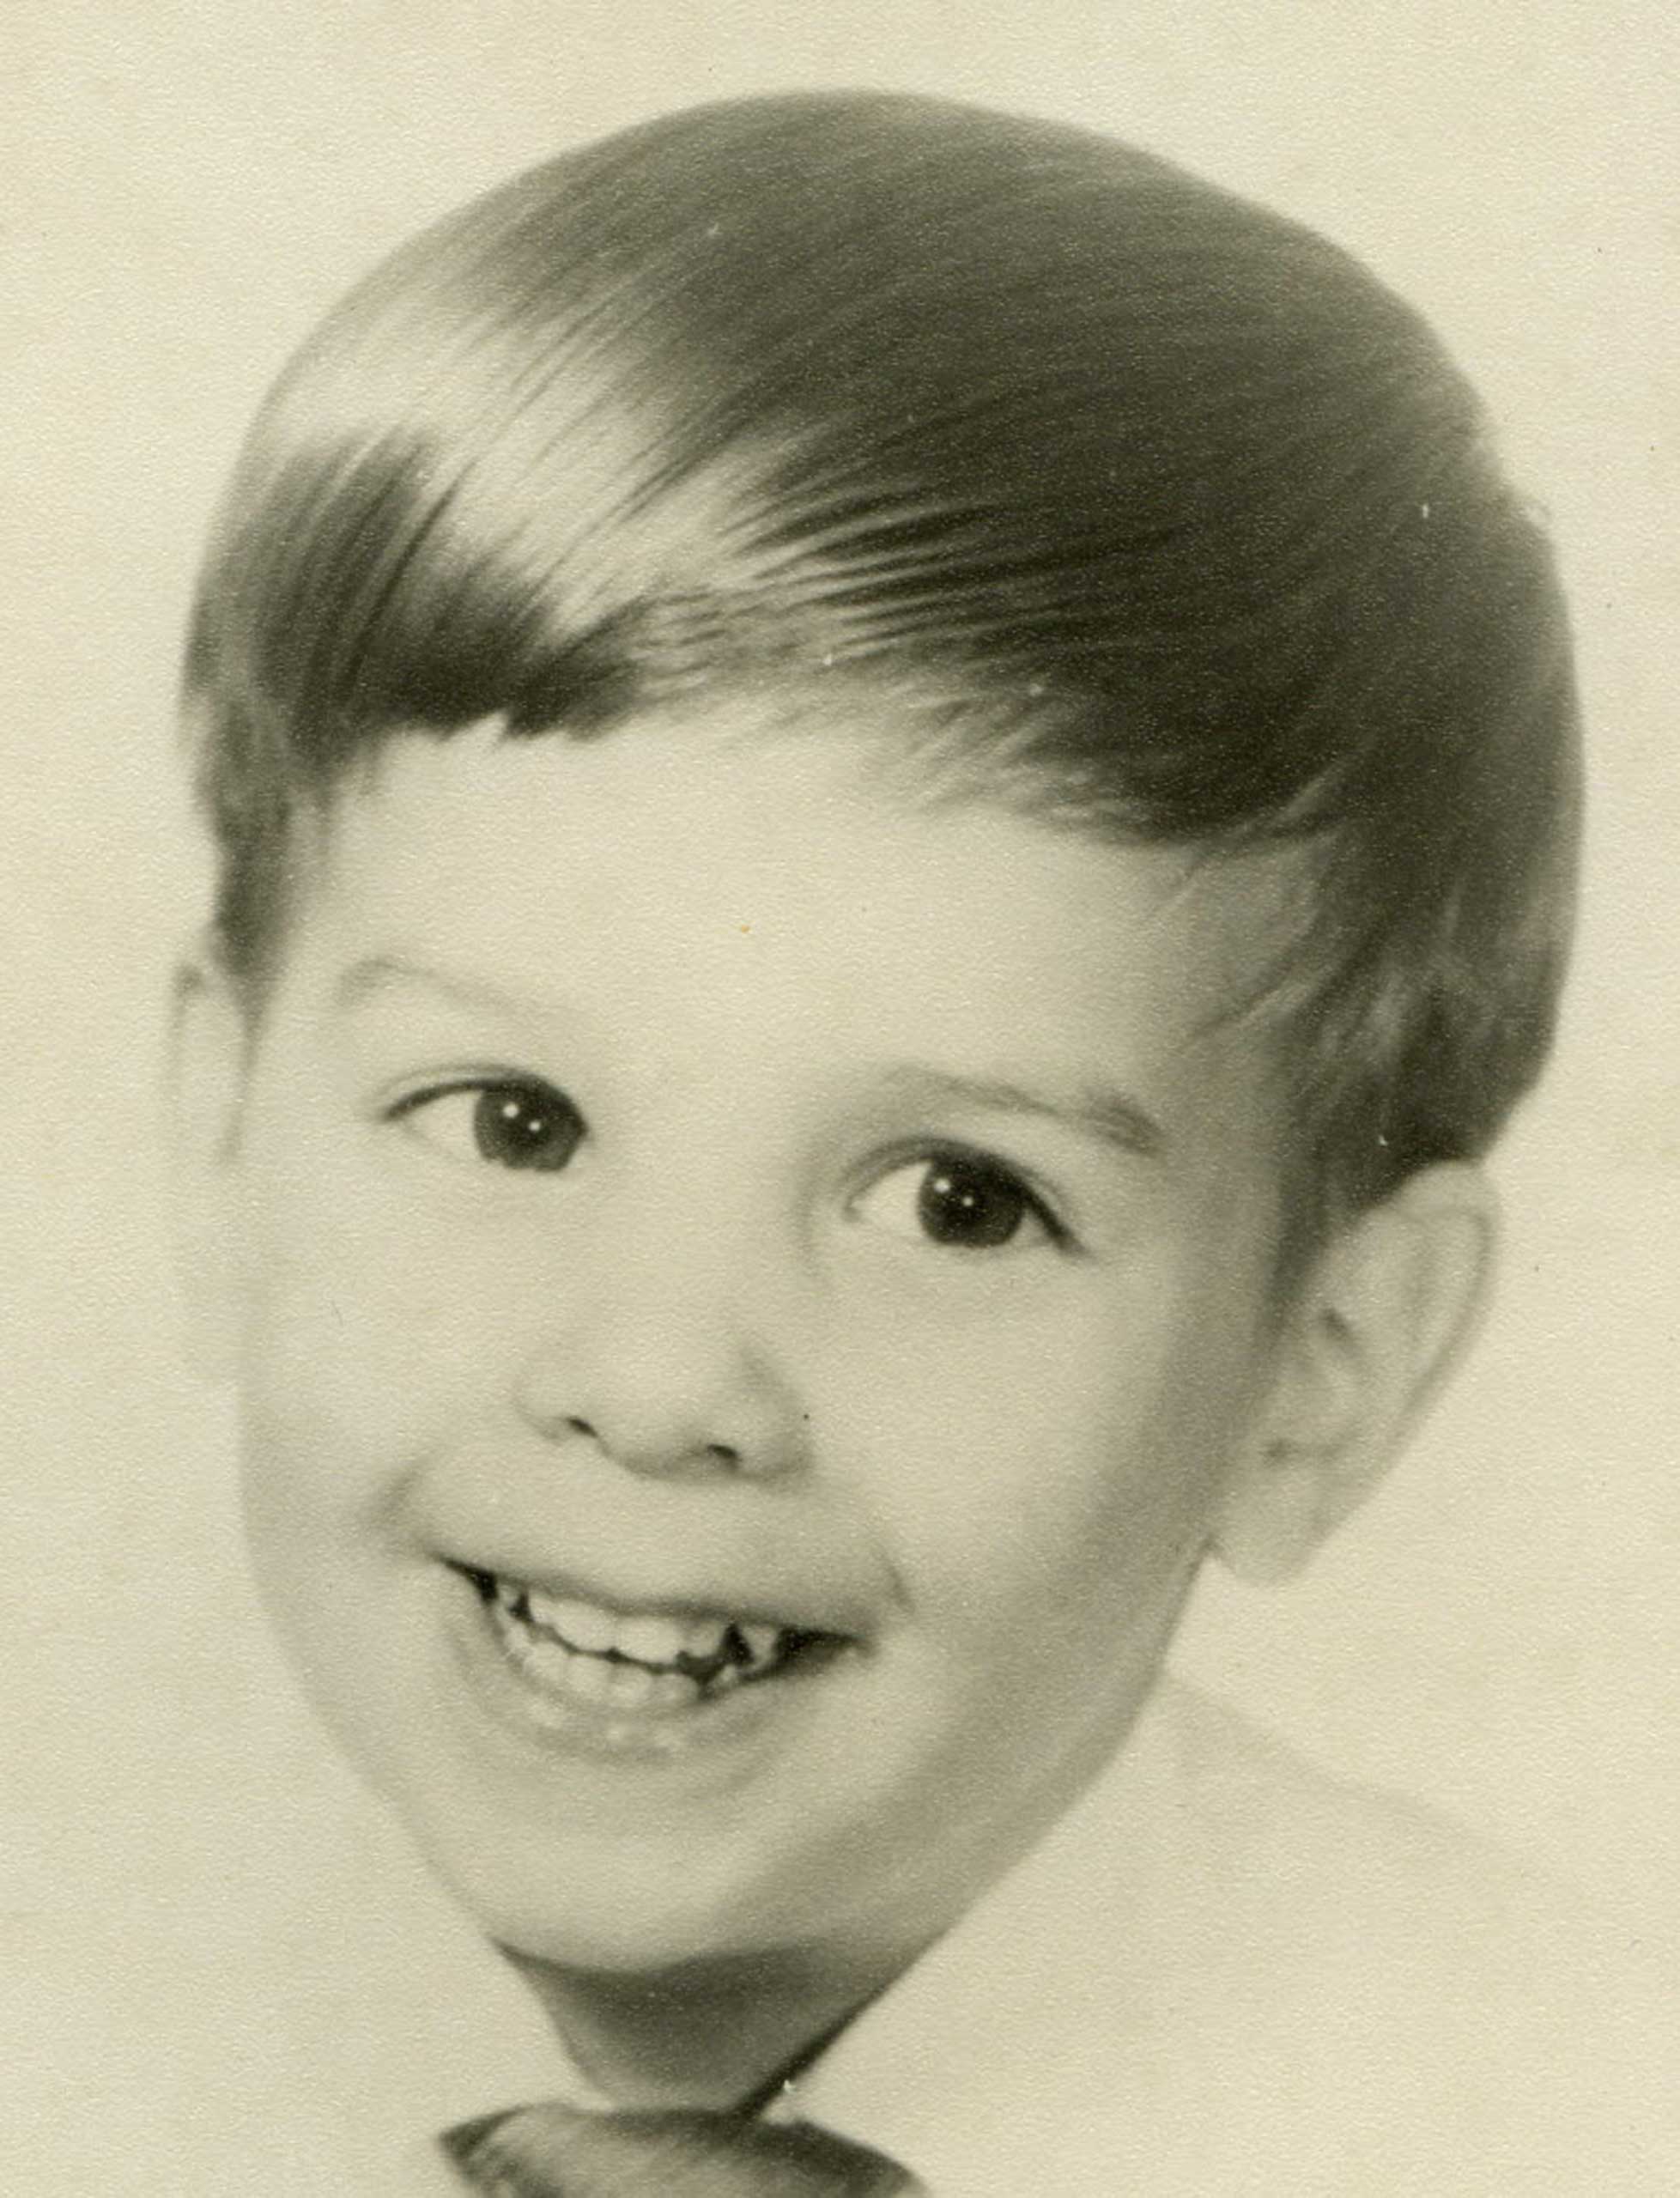 Scott Walker at age 2.